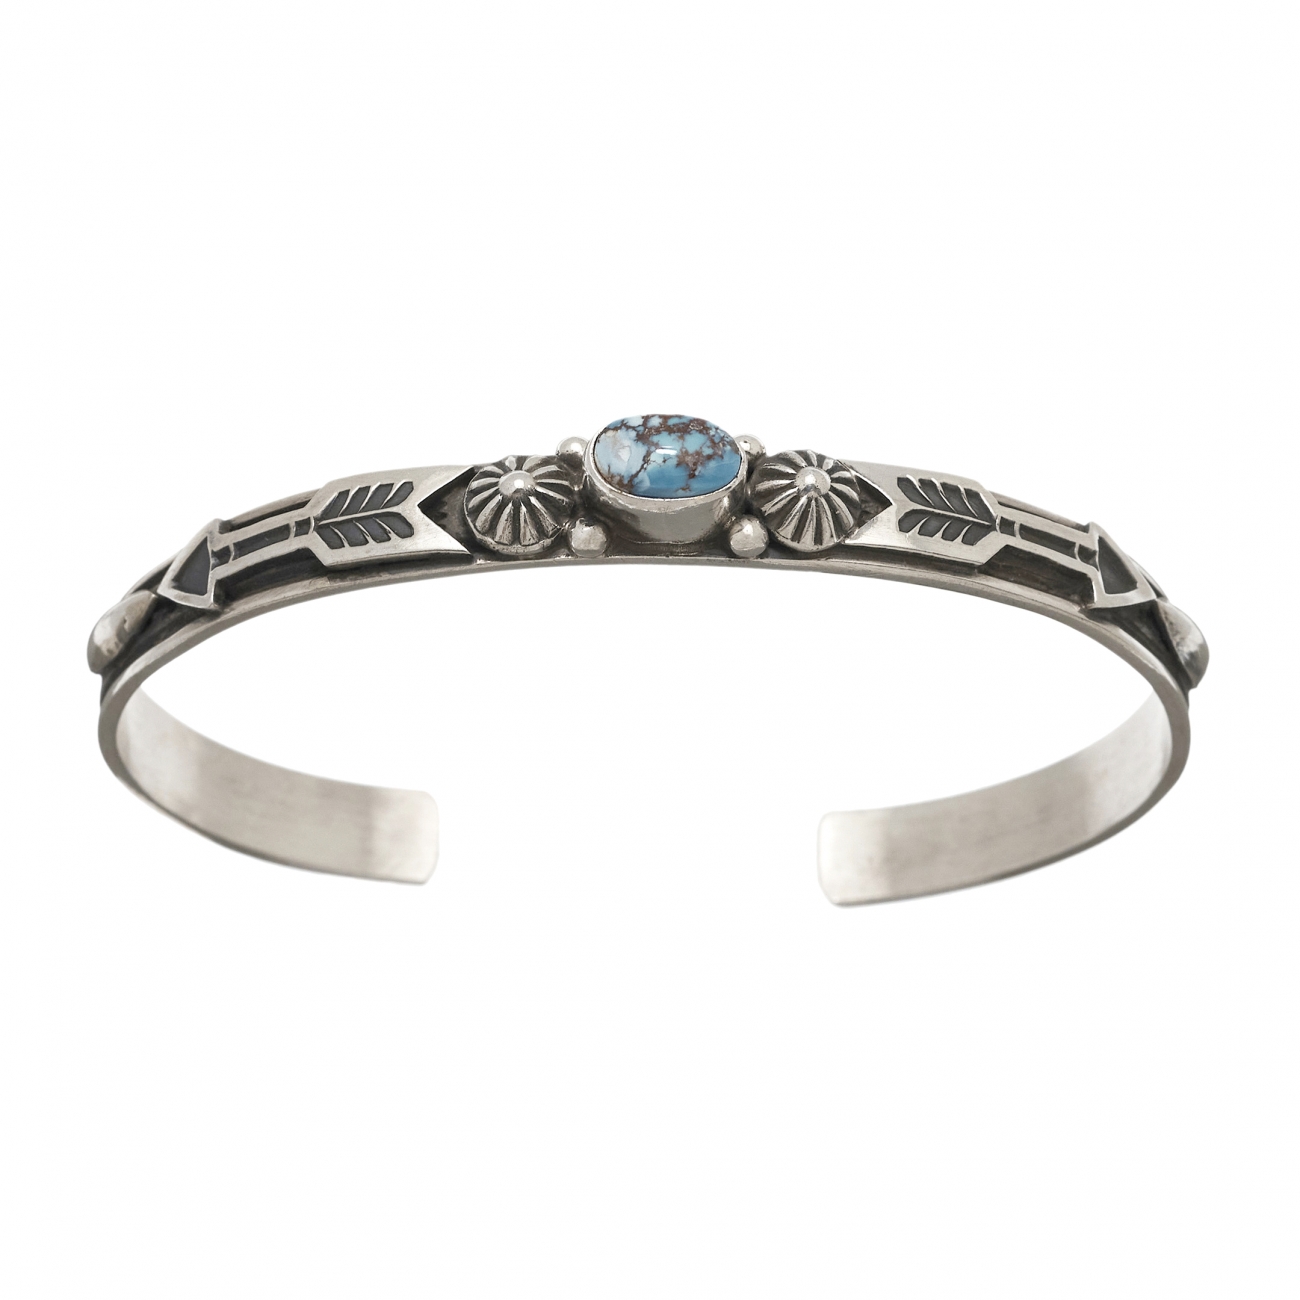 Navajo bracelet BR743 in turquoise and silver - Harpo Paris